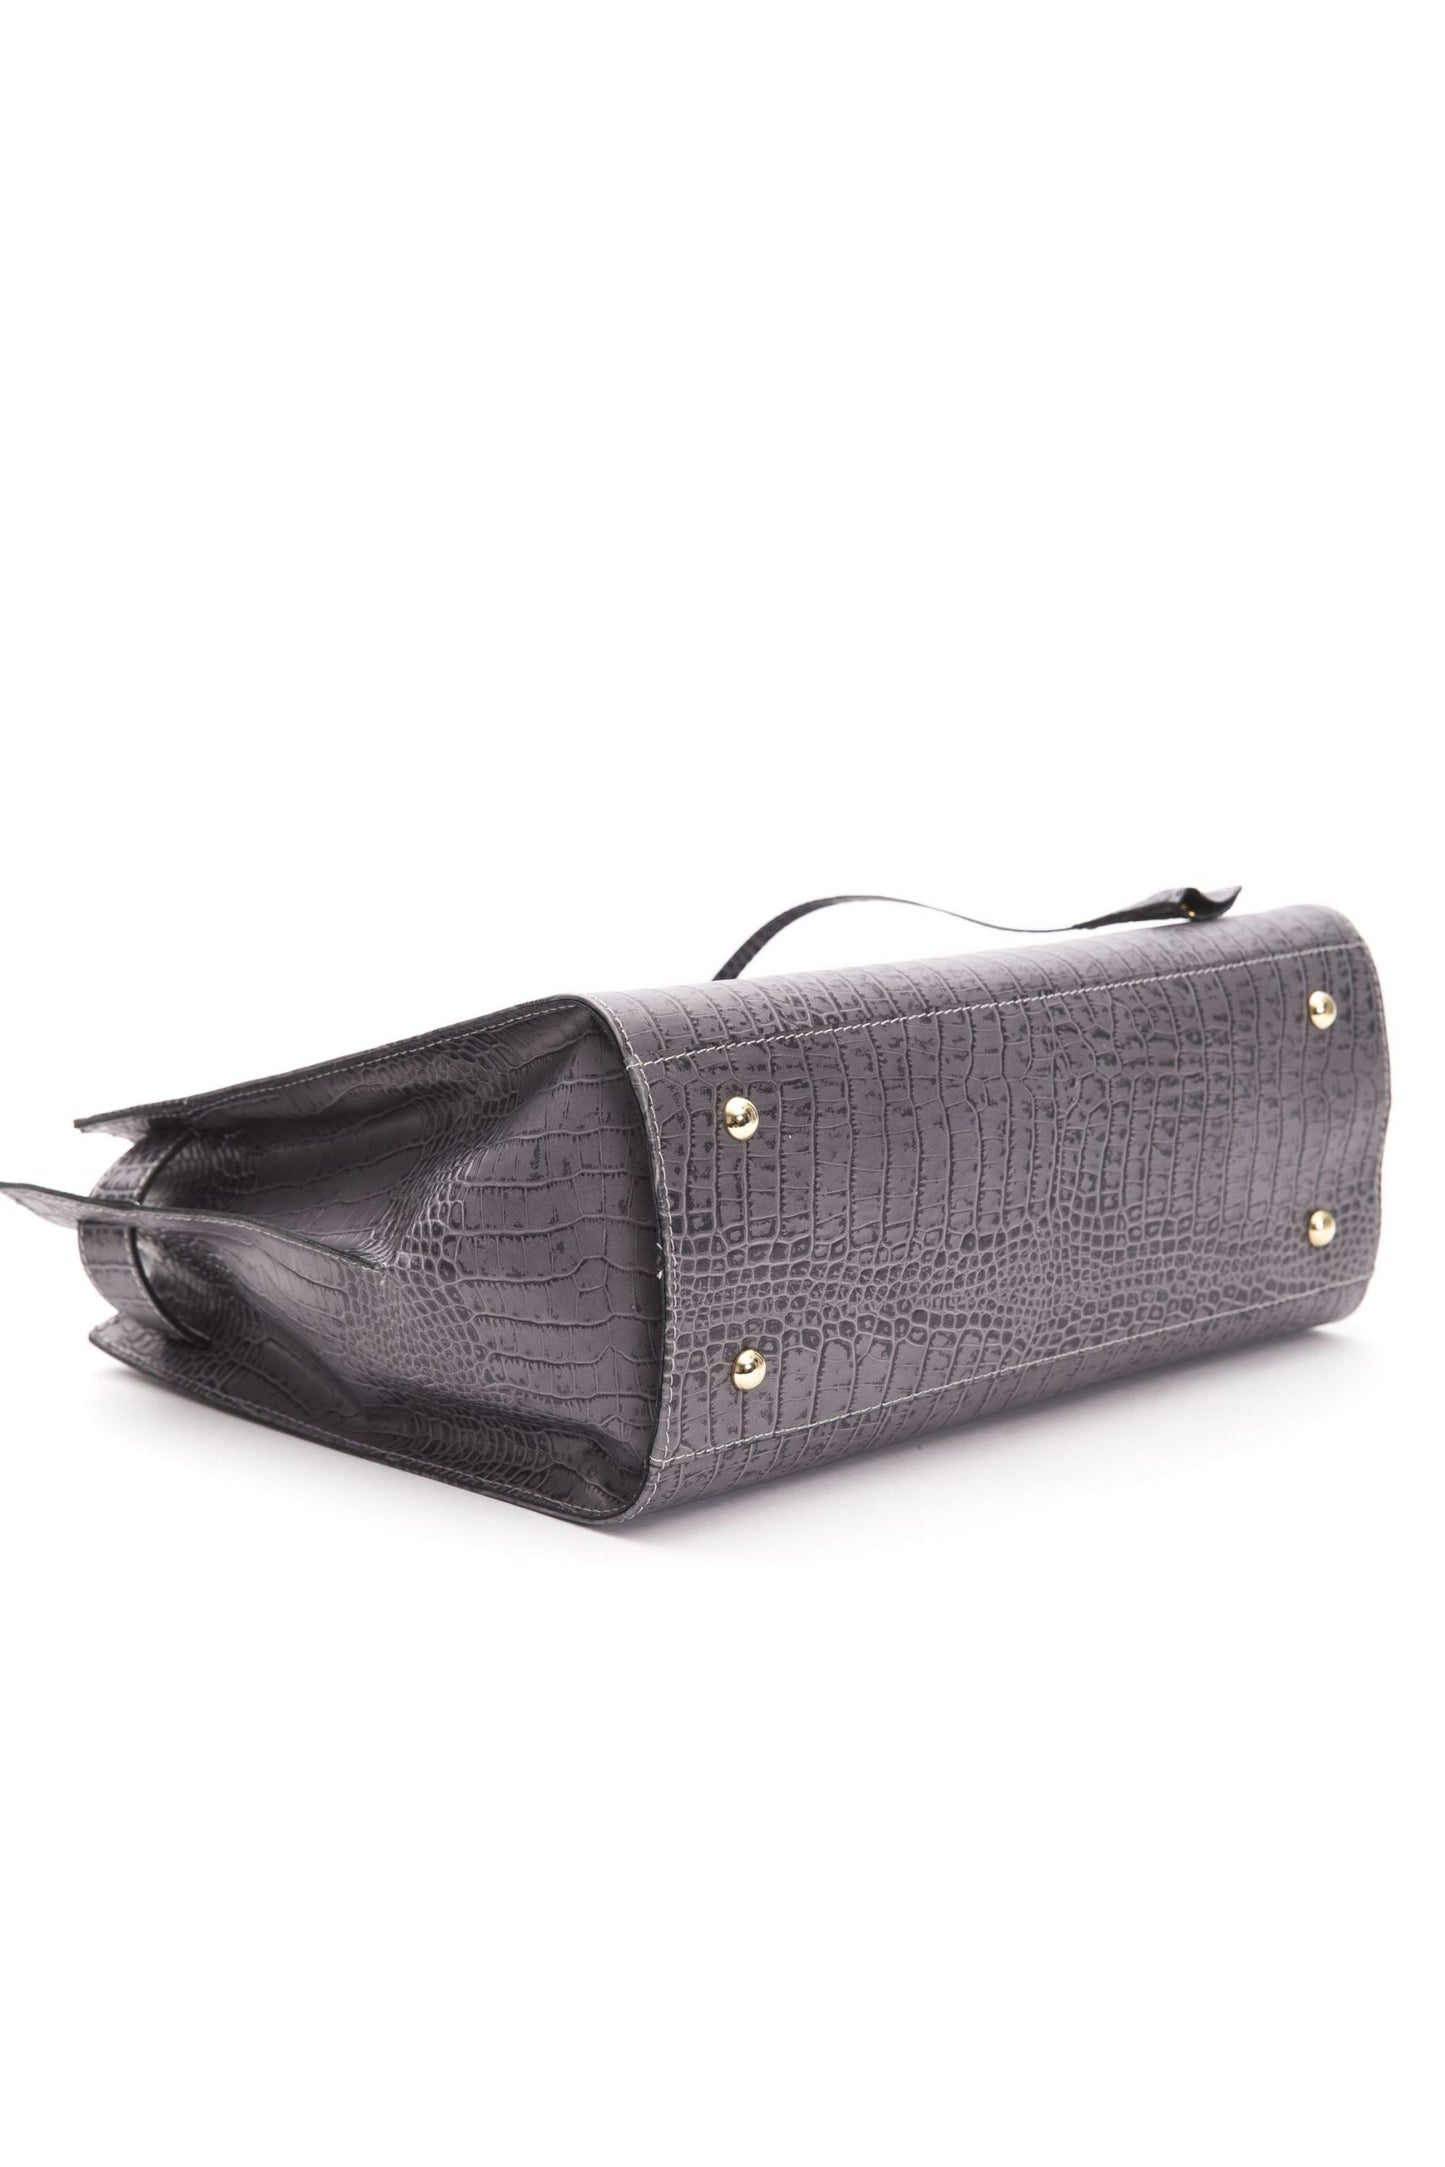 Grey Leather Handbag